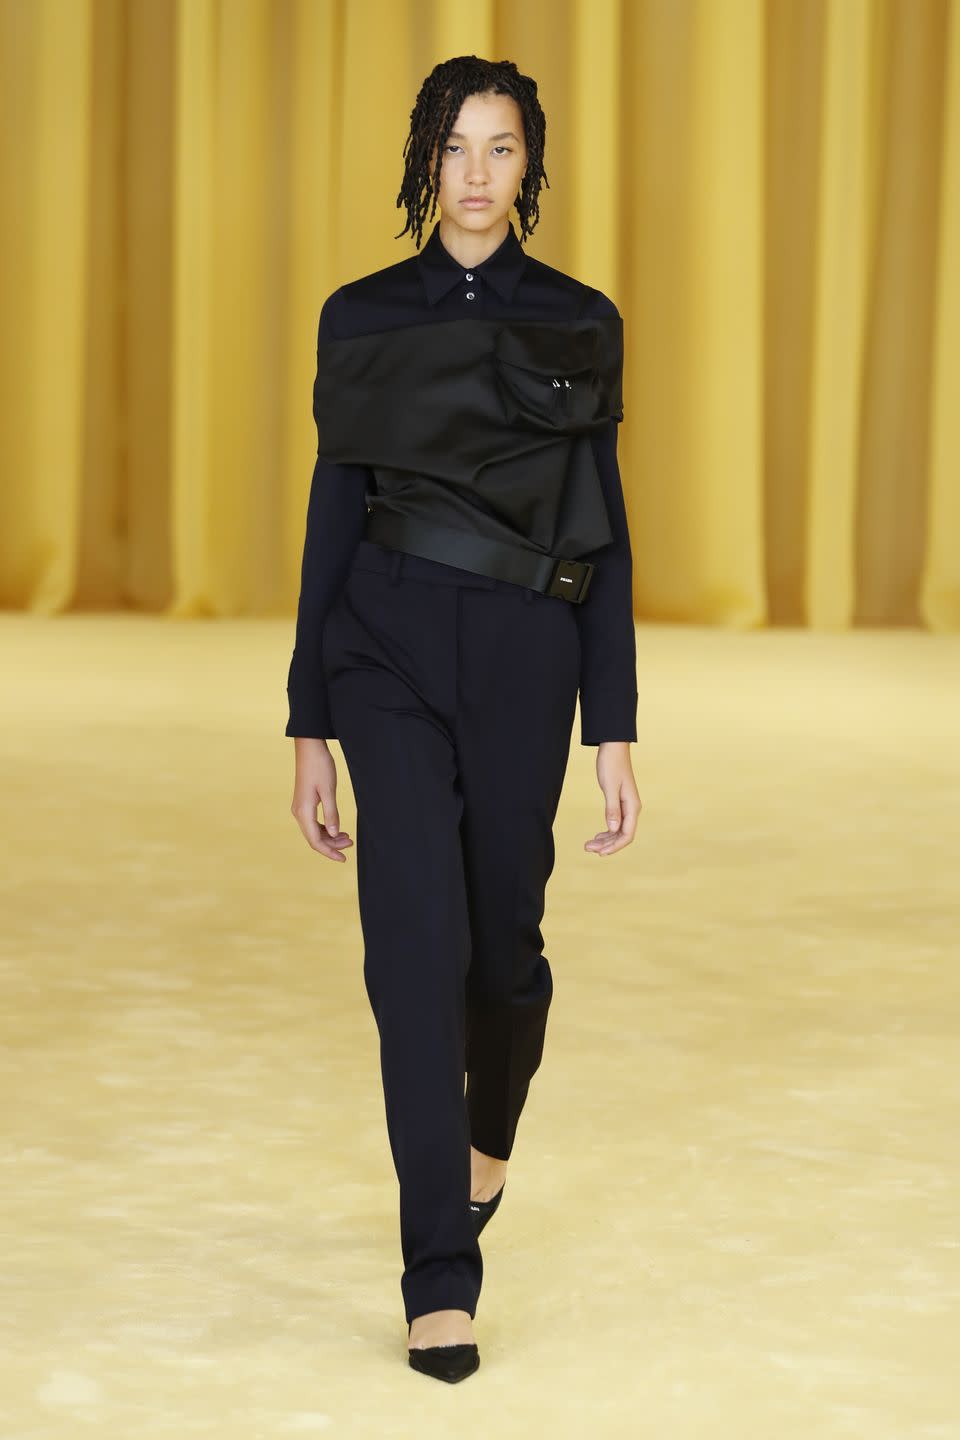 Prada Unveils First Collection By Miuccia Prada and Raf Simons